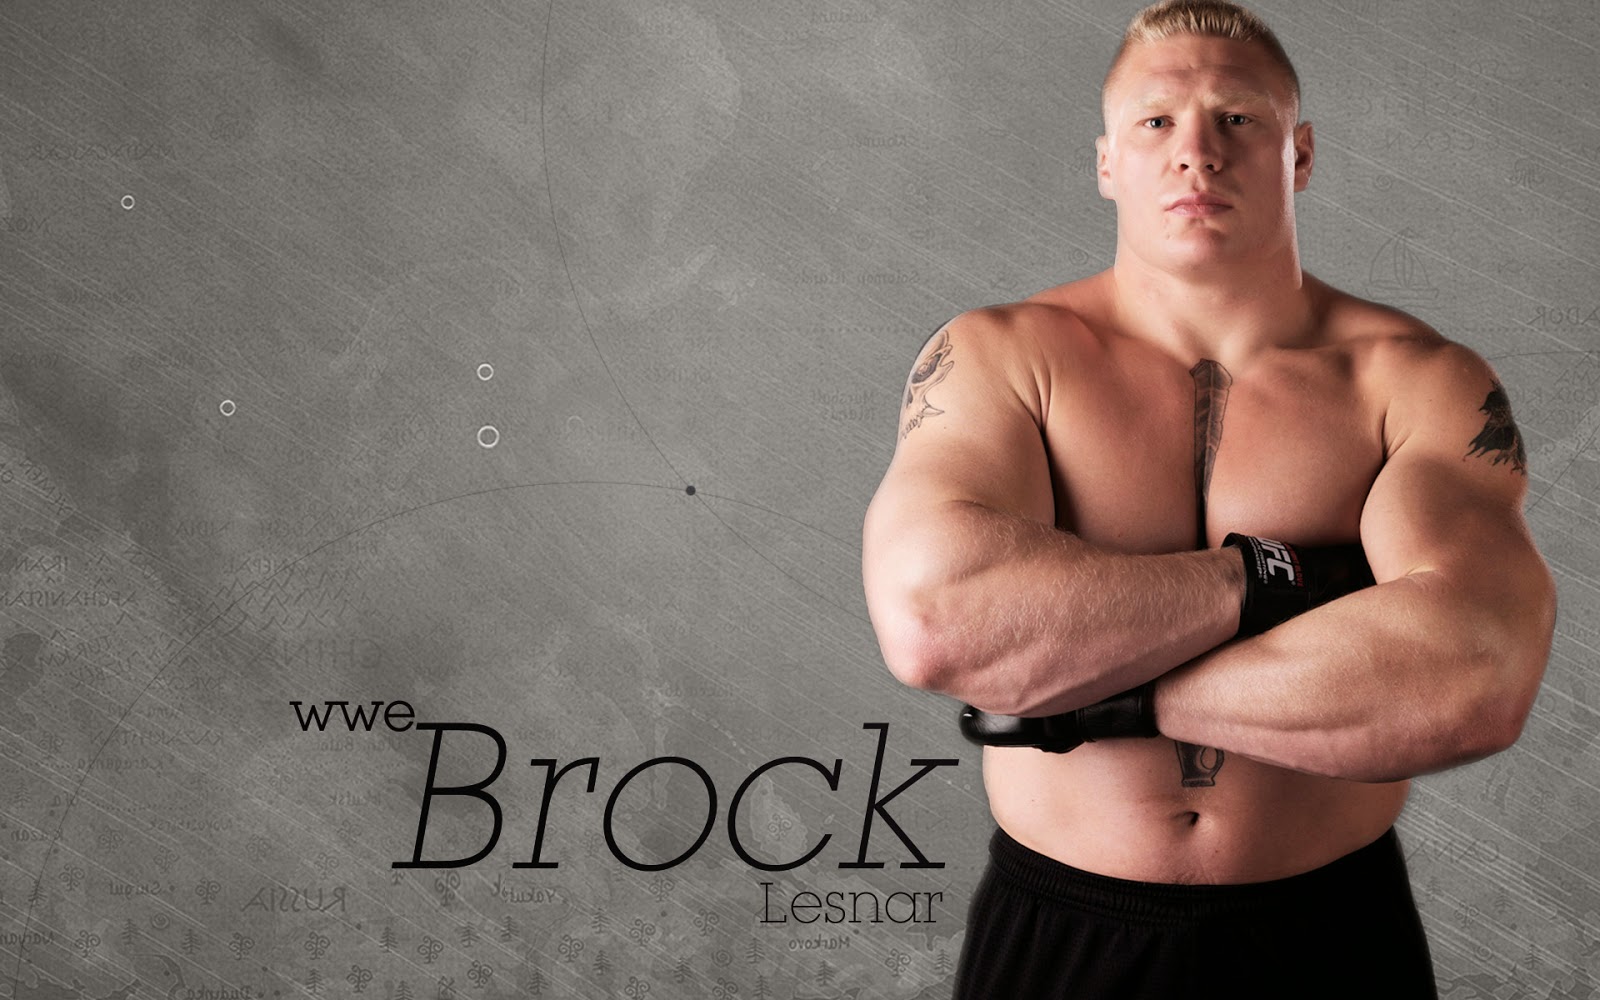 Brock Lesnar Wallpapers,Brock Lesnar 67 Wallpapers,Brock Lesnar P...